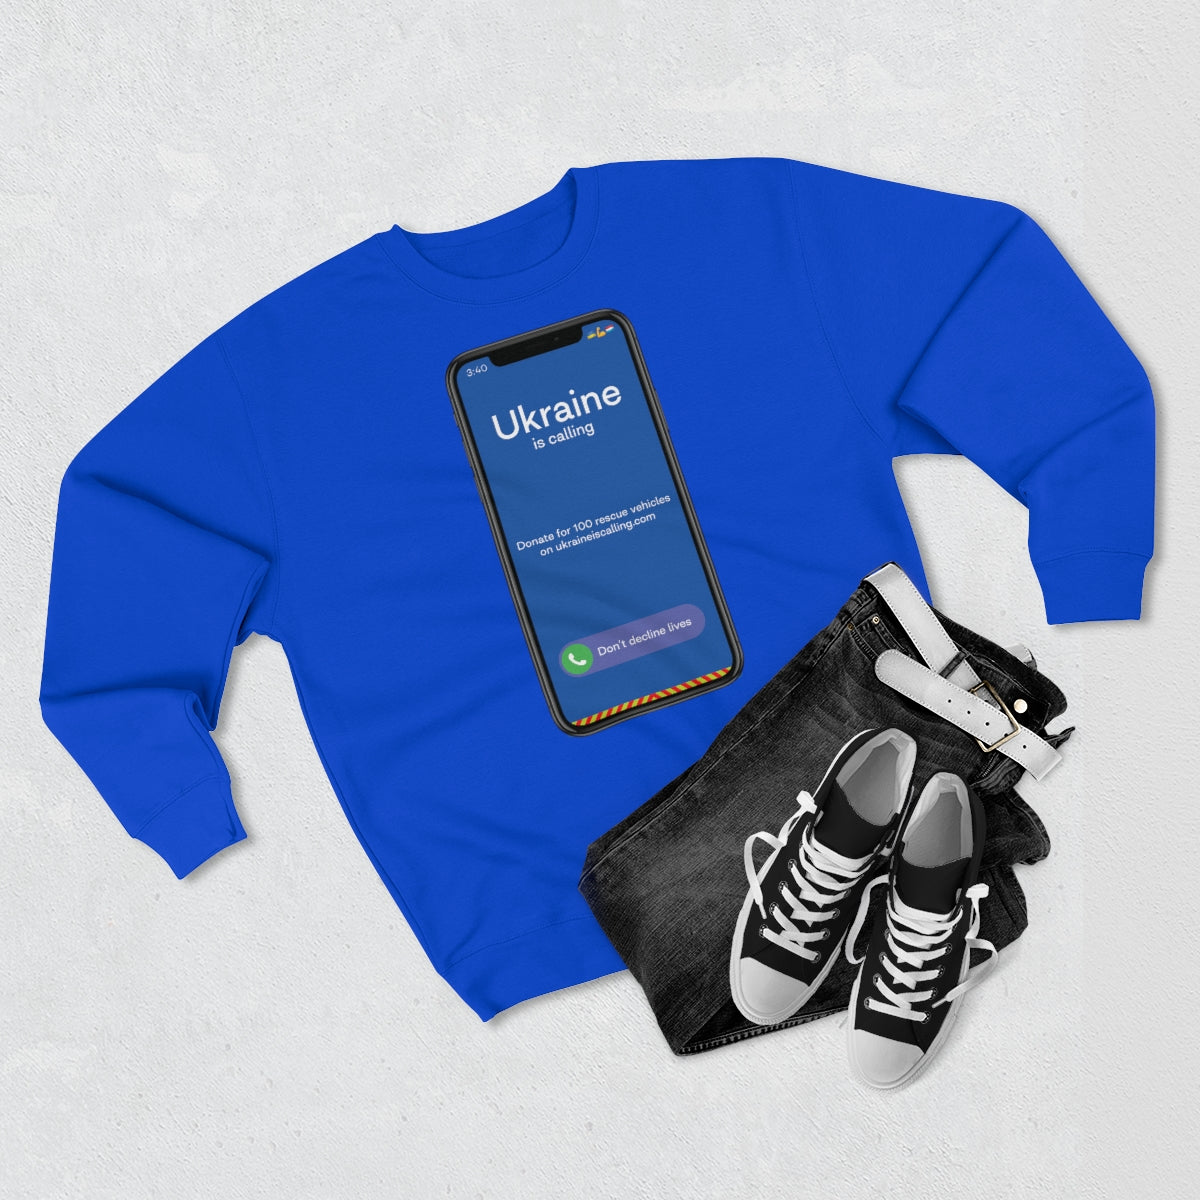 Ukraine Is Calling Screenshot - Unisex Premium Crewneck Sweatshirt